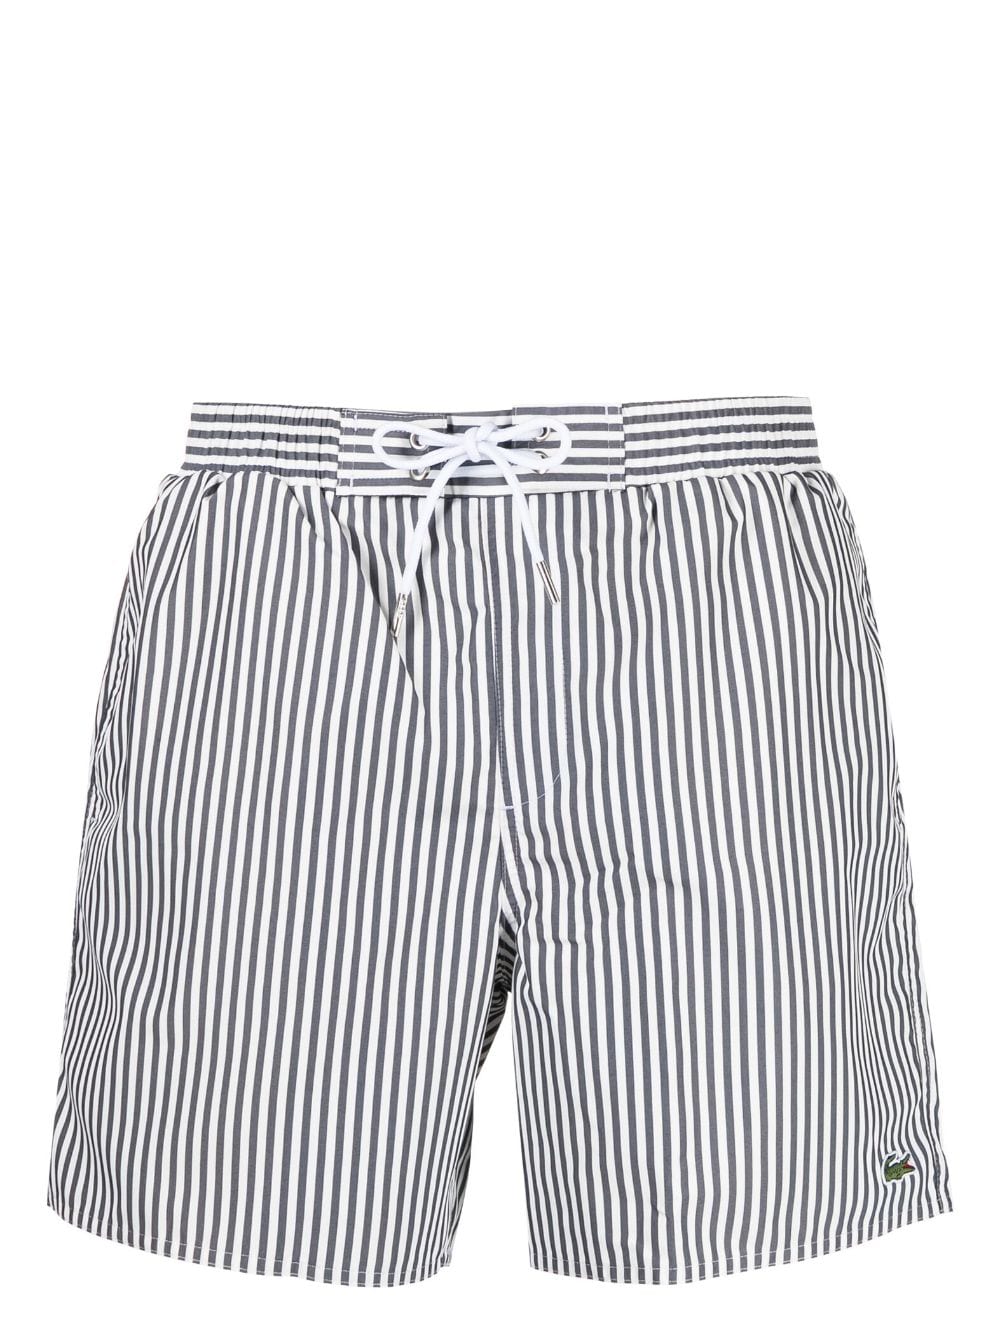 Stripe-print swim shorts<BR/><BR/>